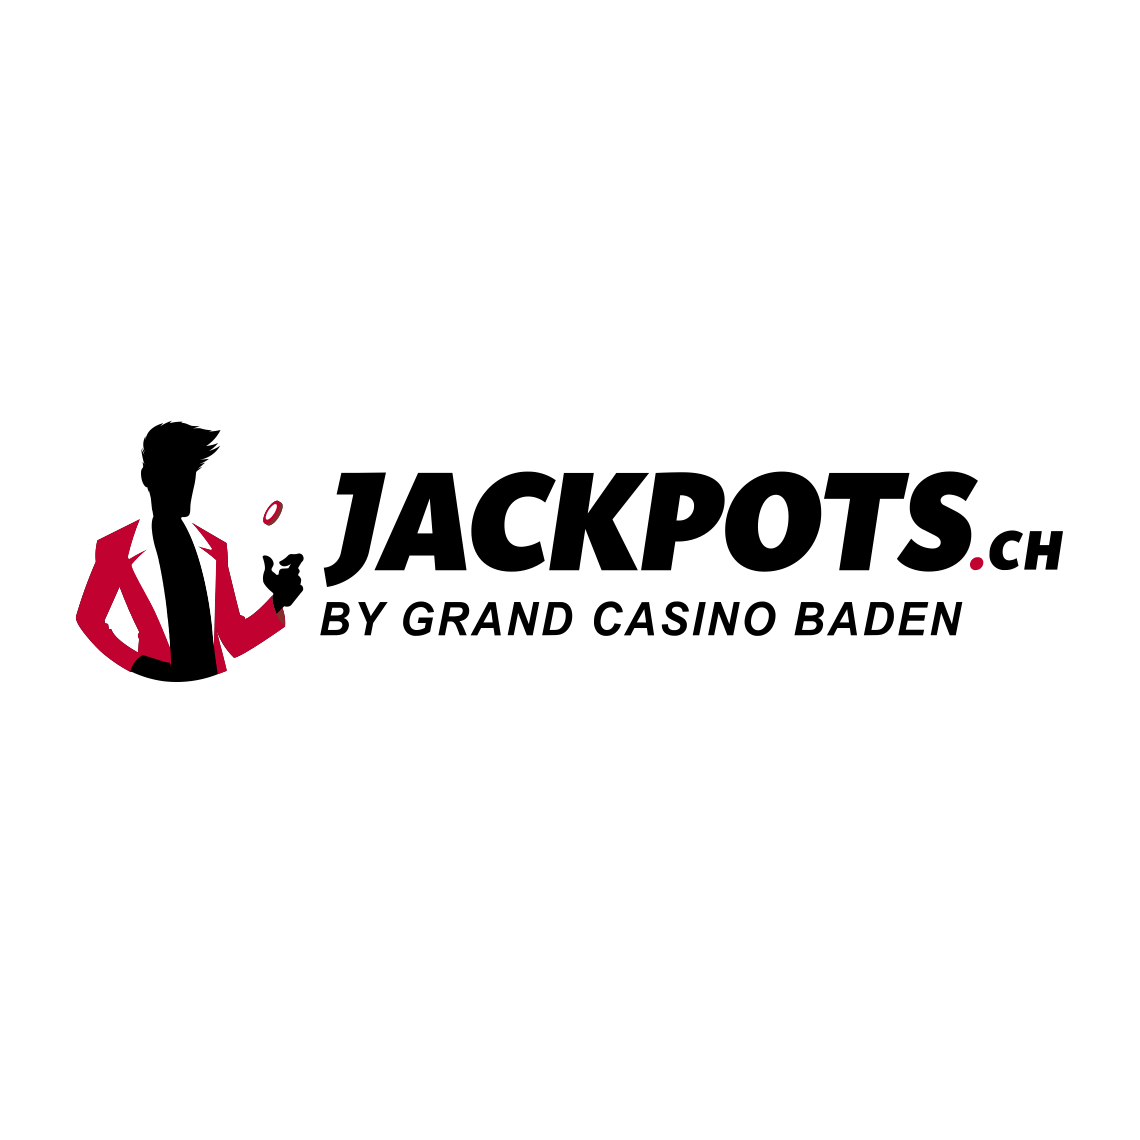 Jackpots.ch